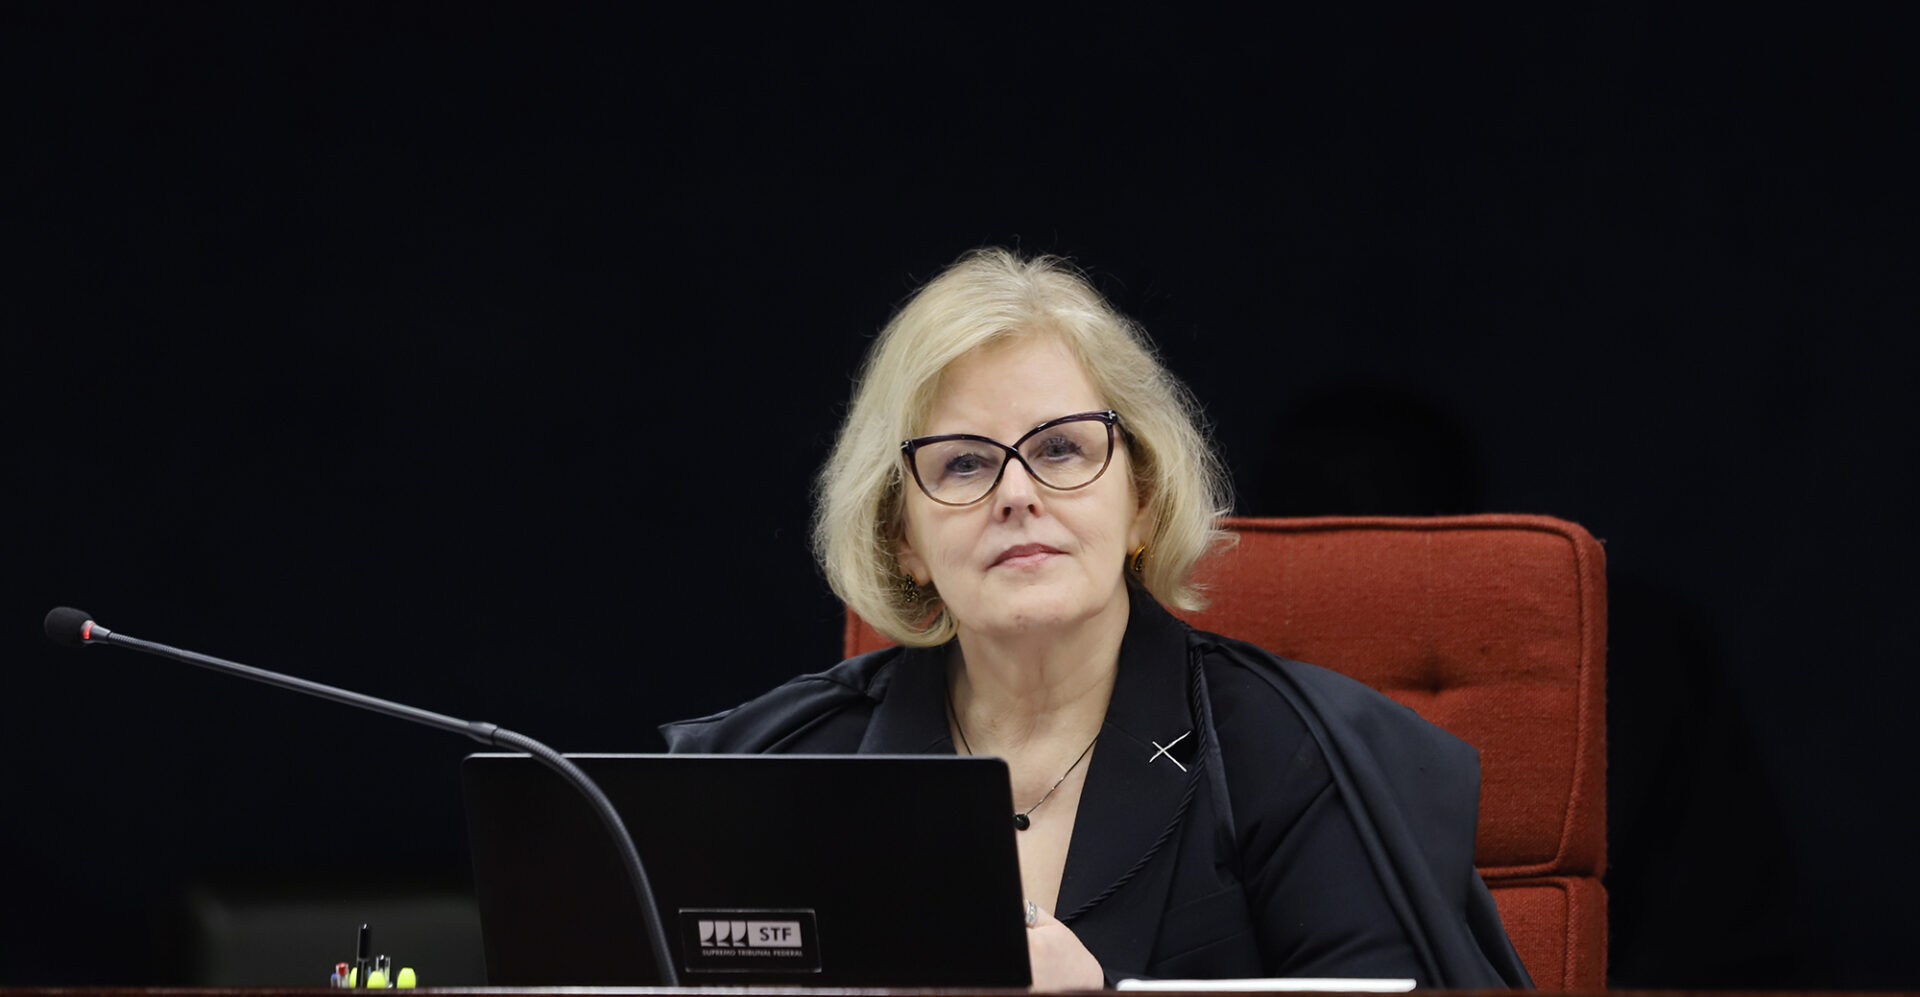 Ministra Rosa Weber, vice-presidente do STF. Foto: SCO/STF